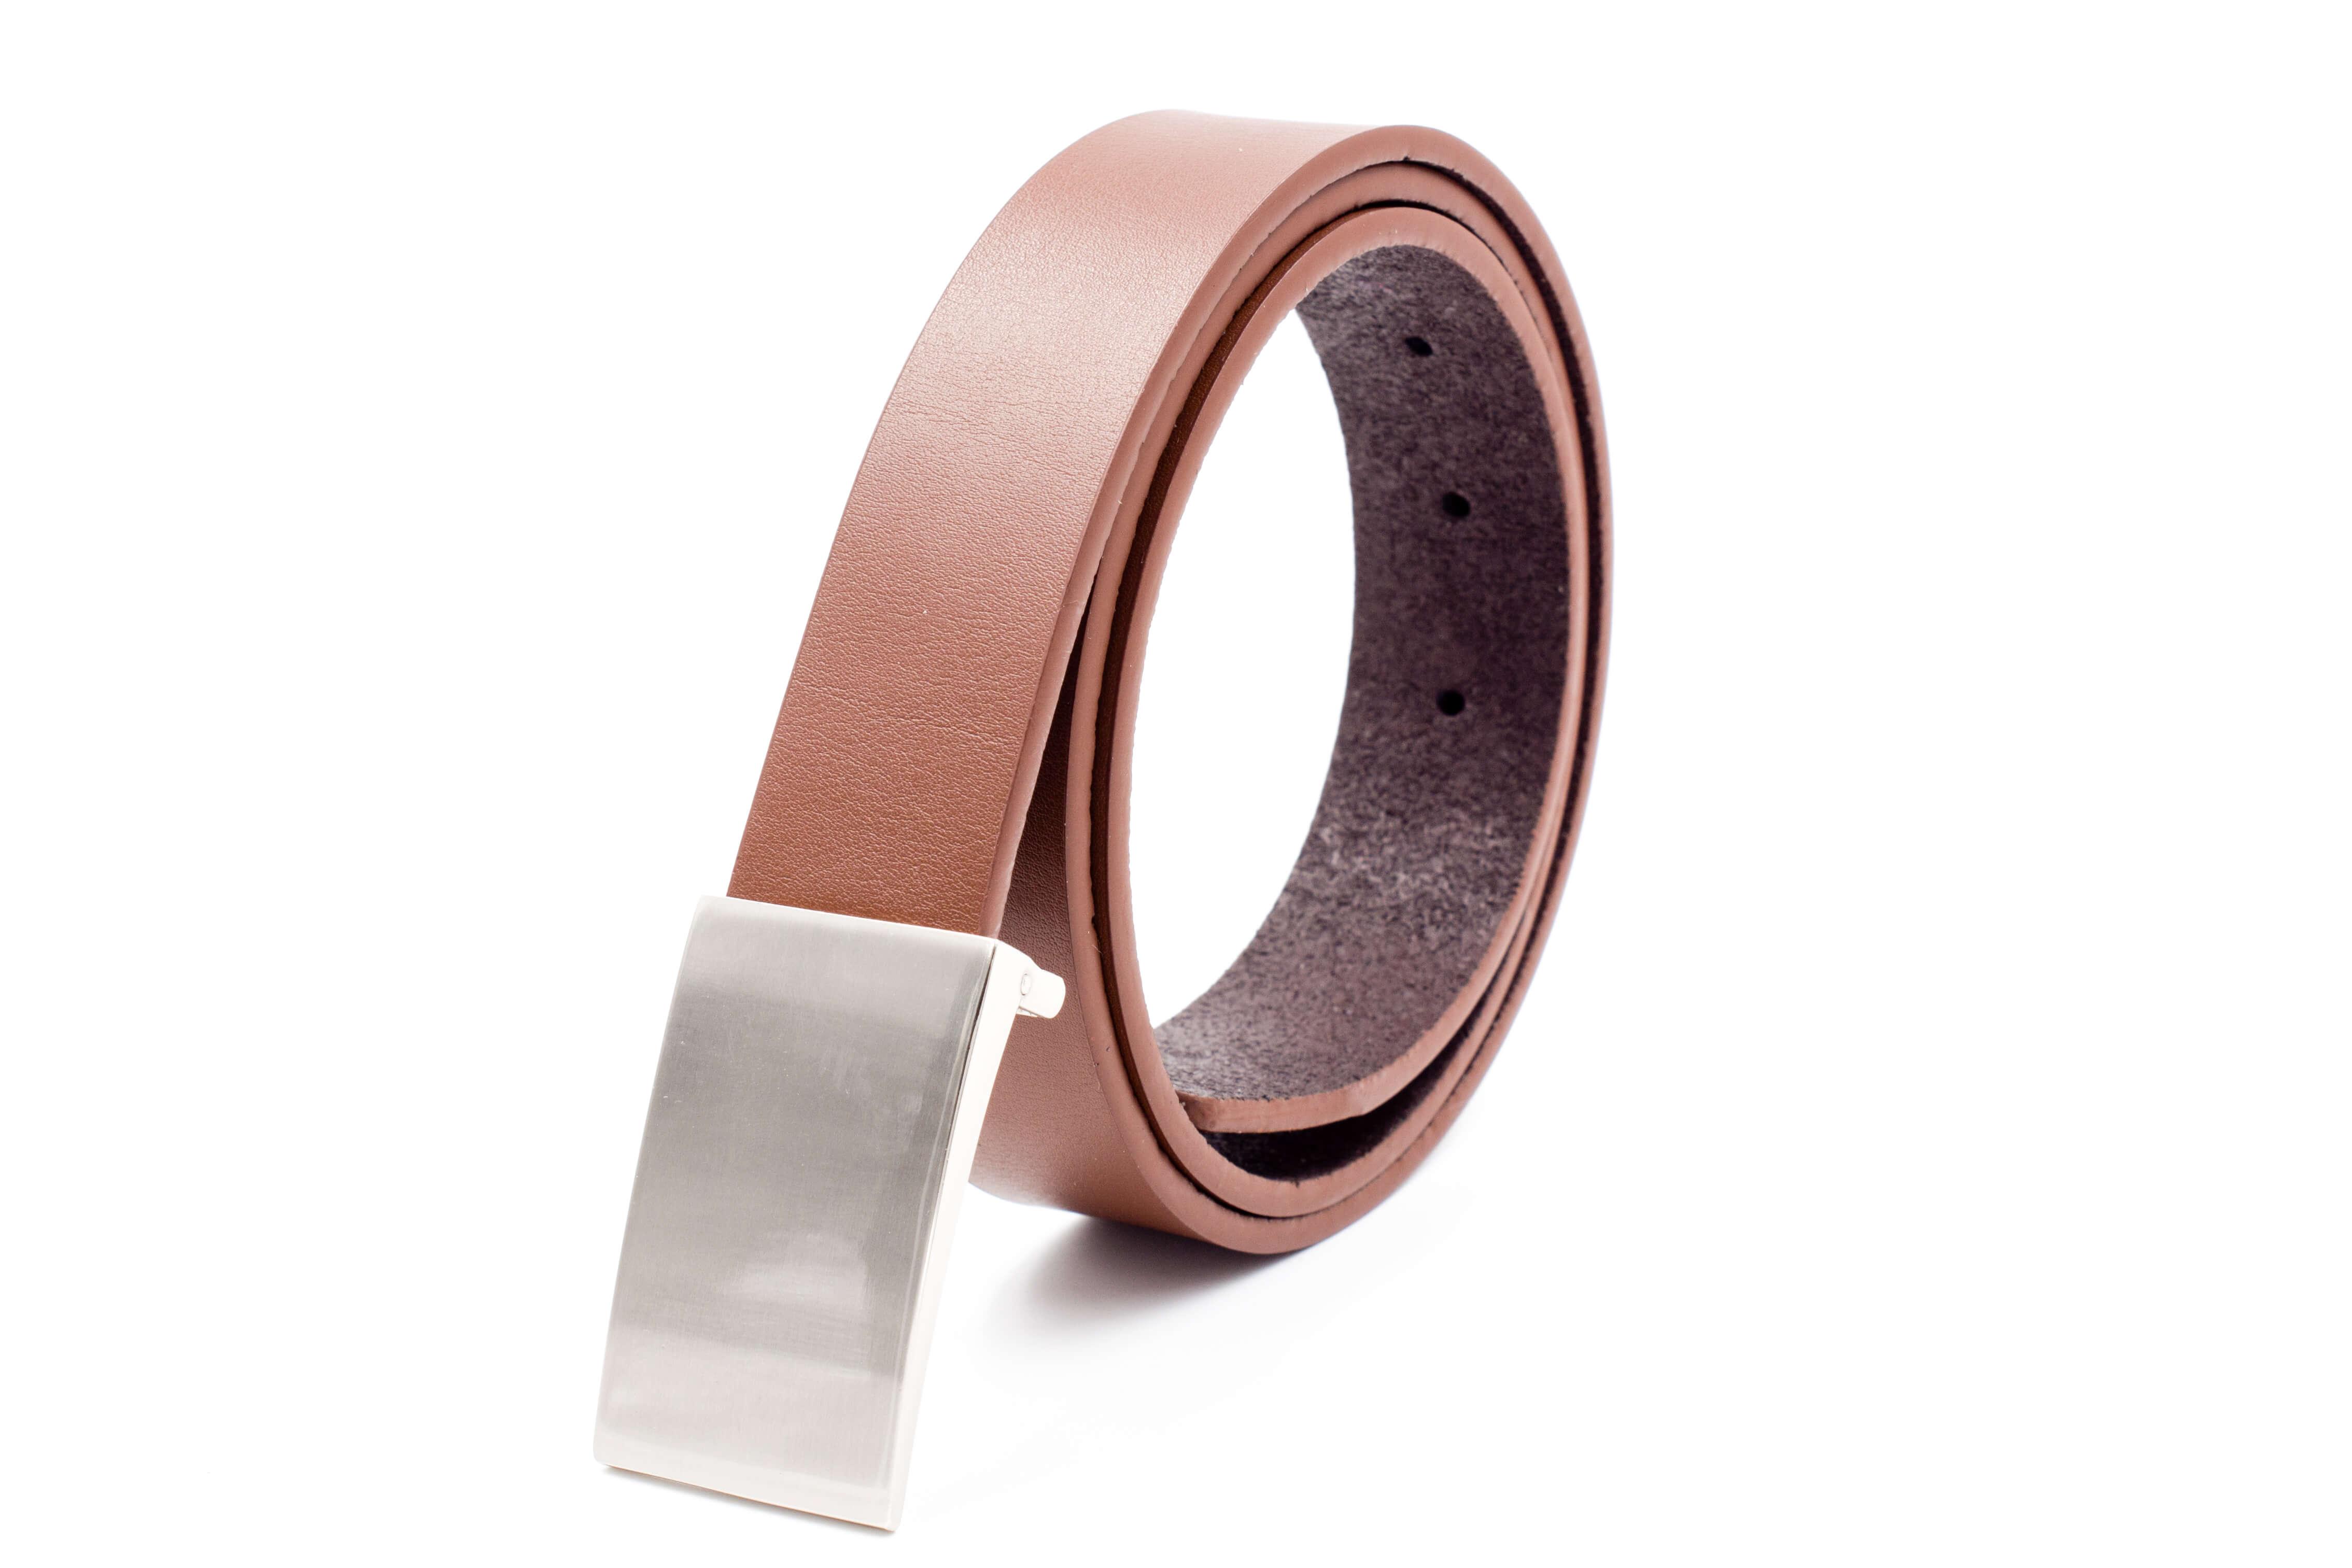 Boys brown leather belt, Kids brown belt plate buckle belt